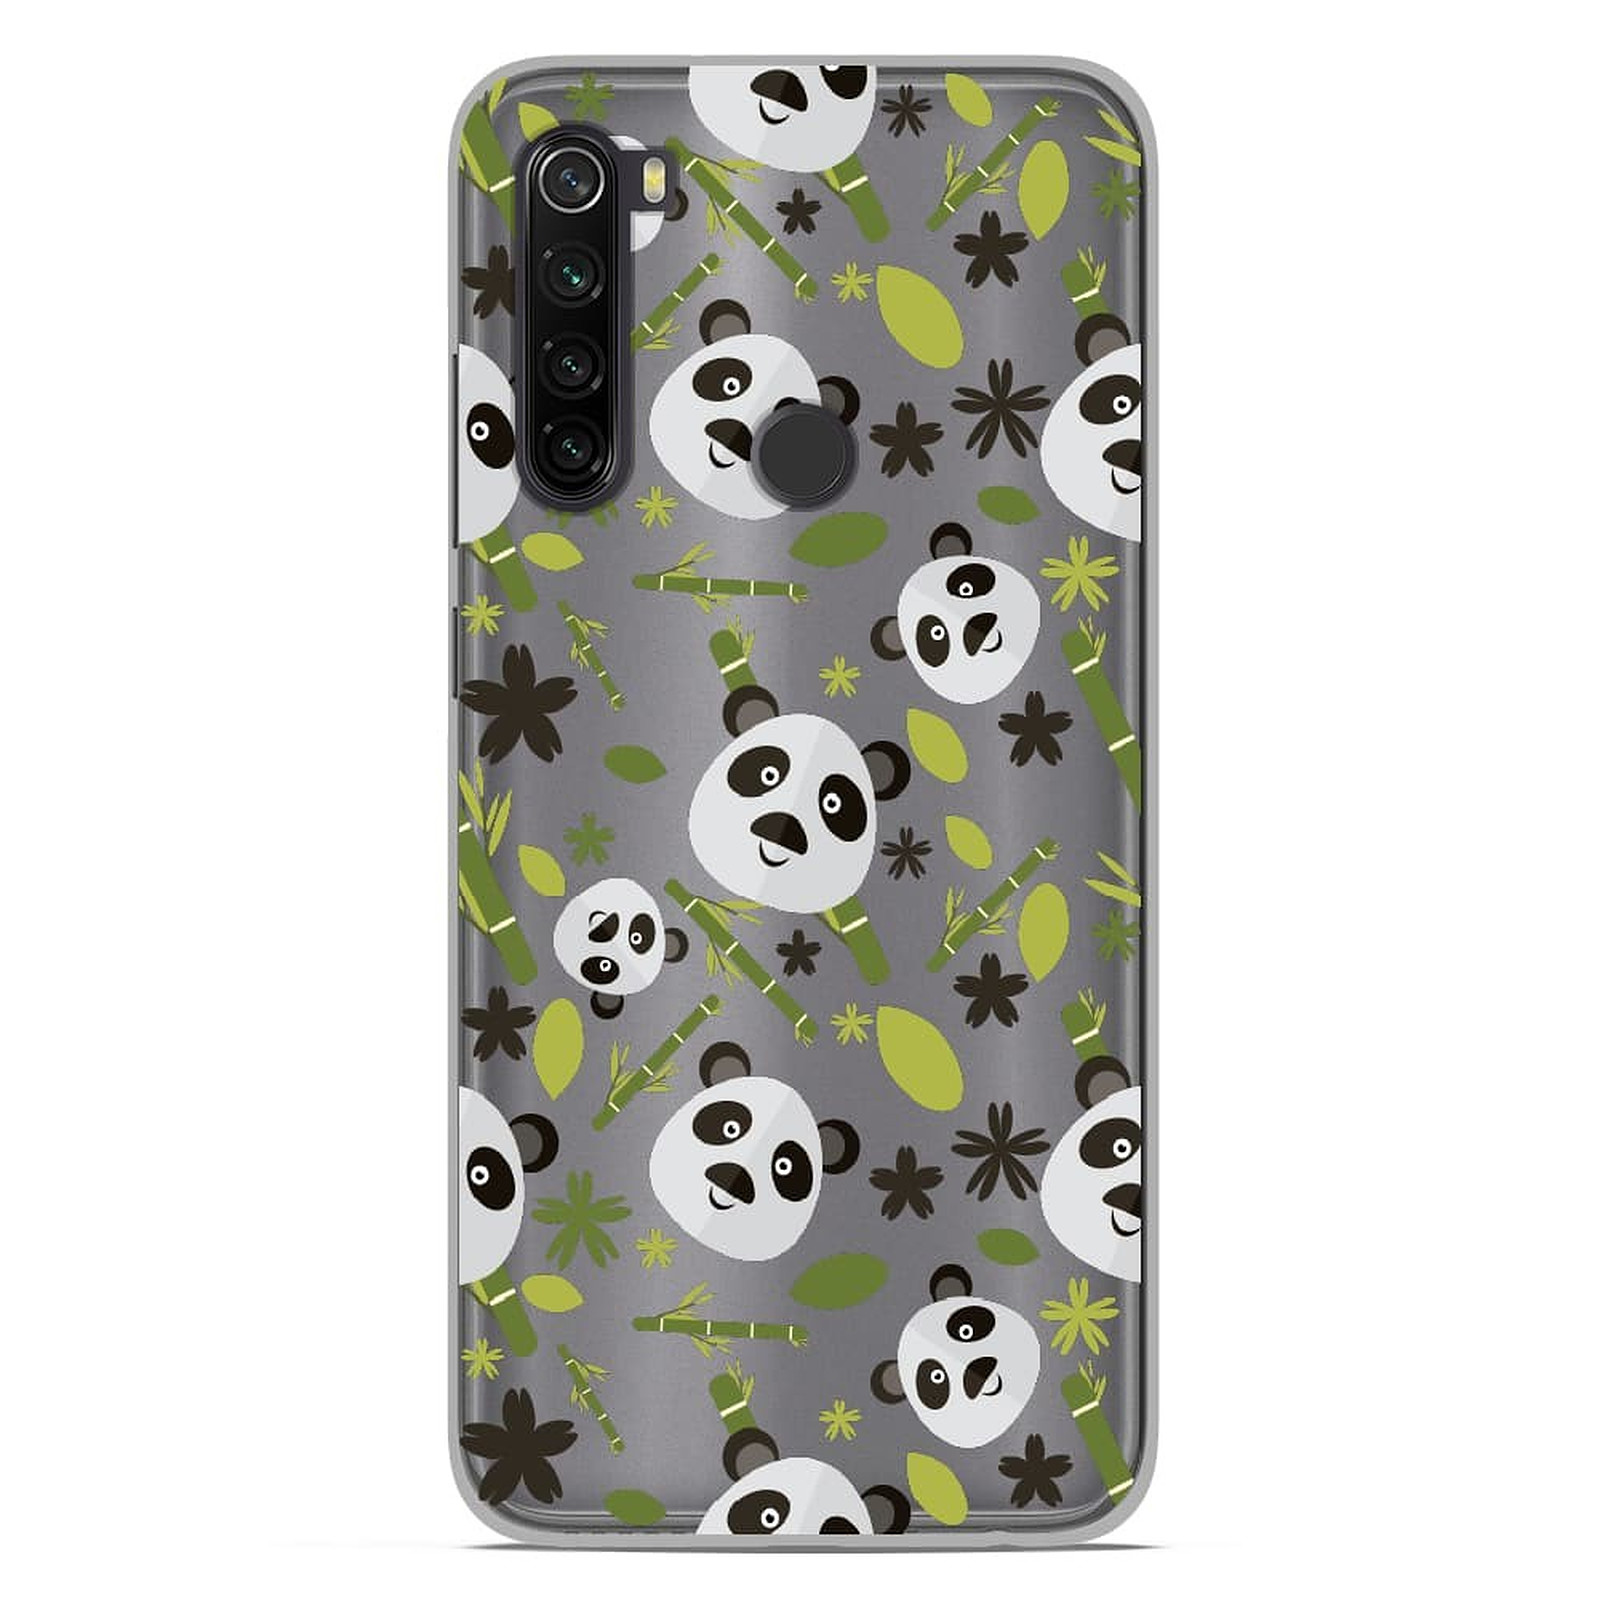 1001 Coques Coque silicone gel Xiaomi Redmi Note 8T motif Pandas et Bambou - Coque telephone 1001Coques